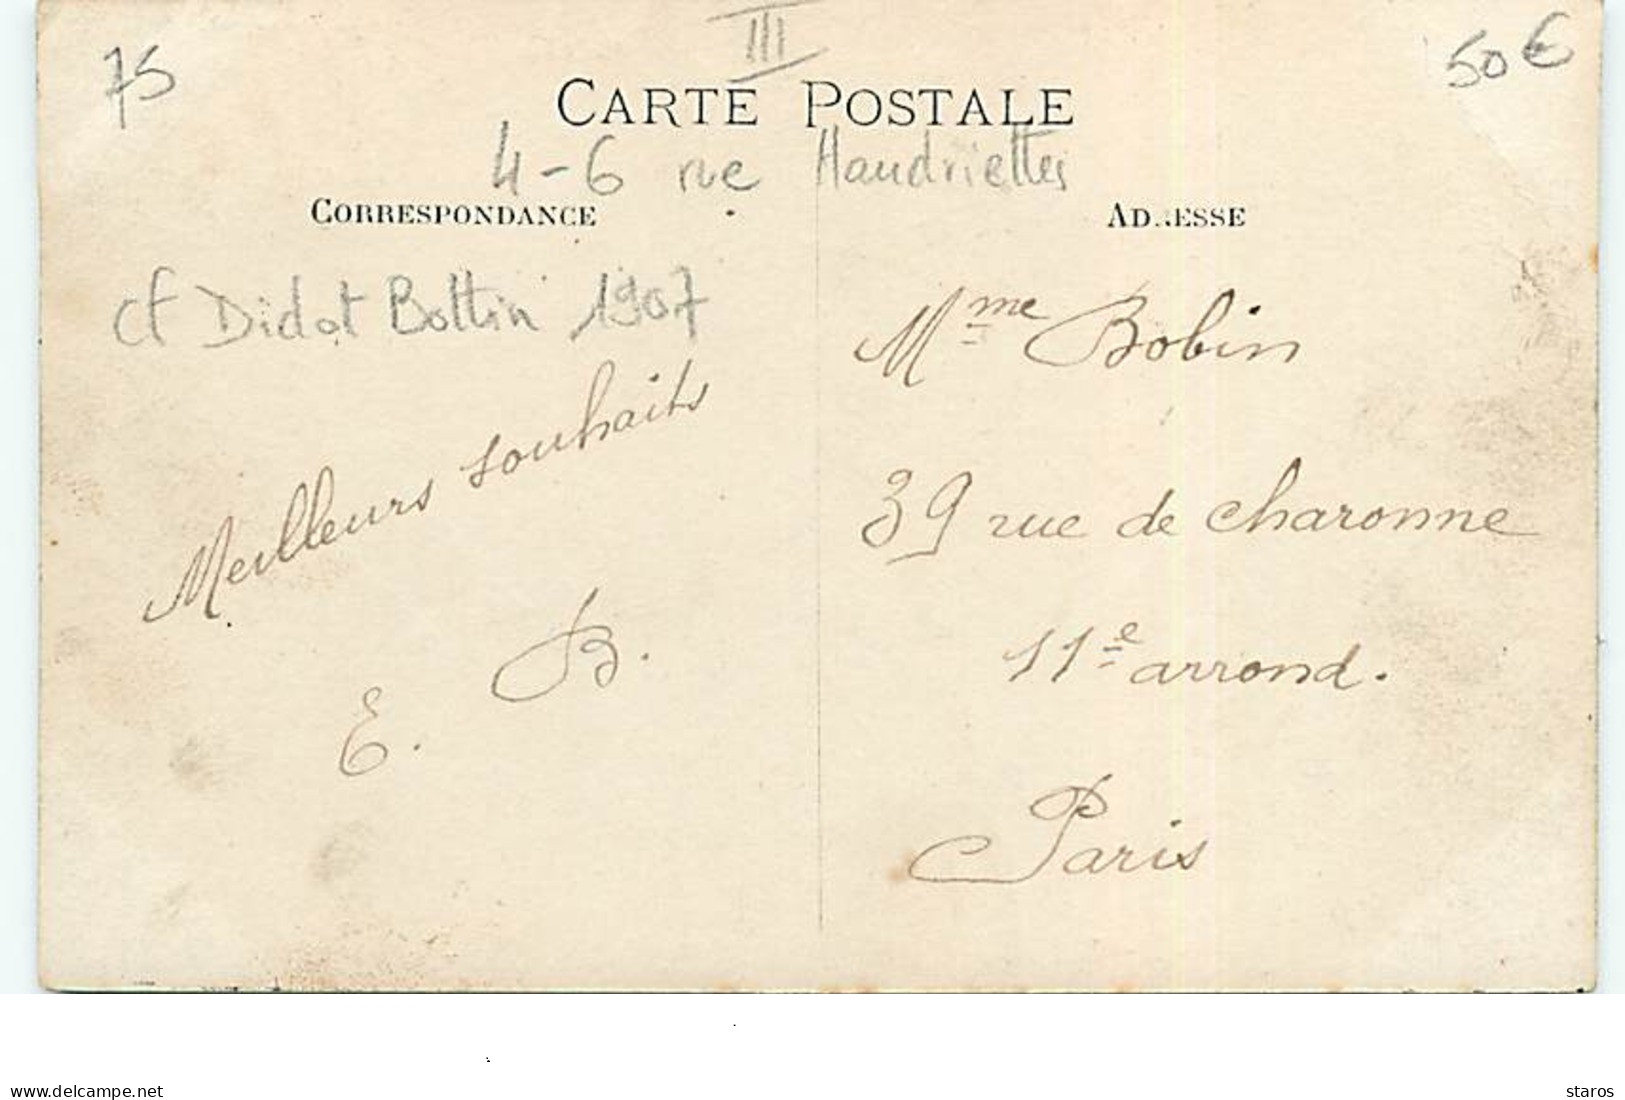 Carte-Photo - PARIS III - 4-6 Rue Haudriettes (cf Didot Bottin 1907) - Cartonnages Veuve Planson - Paris (03)